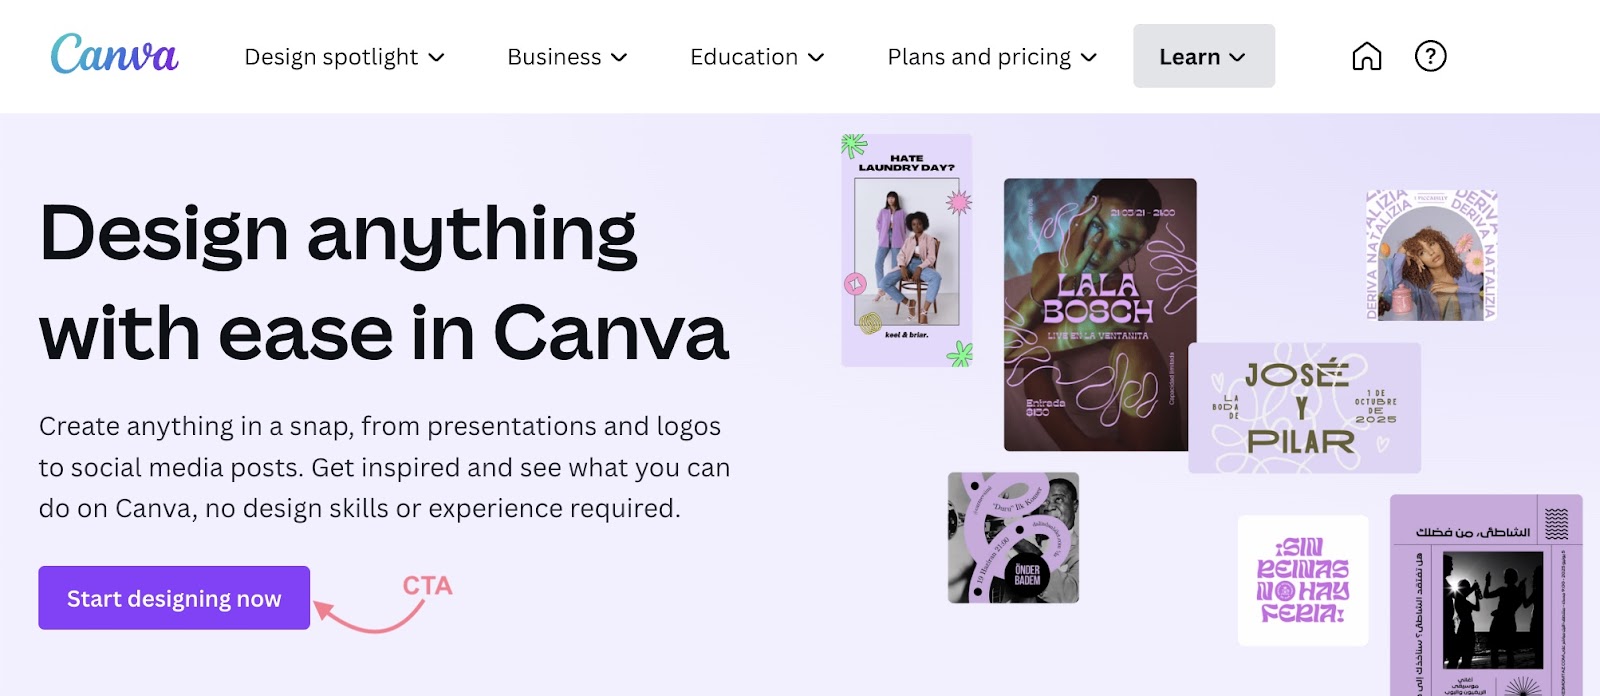 "Start designing now" CTA on Canva's website